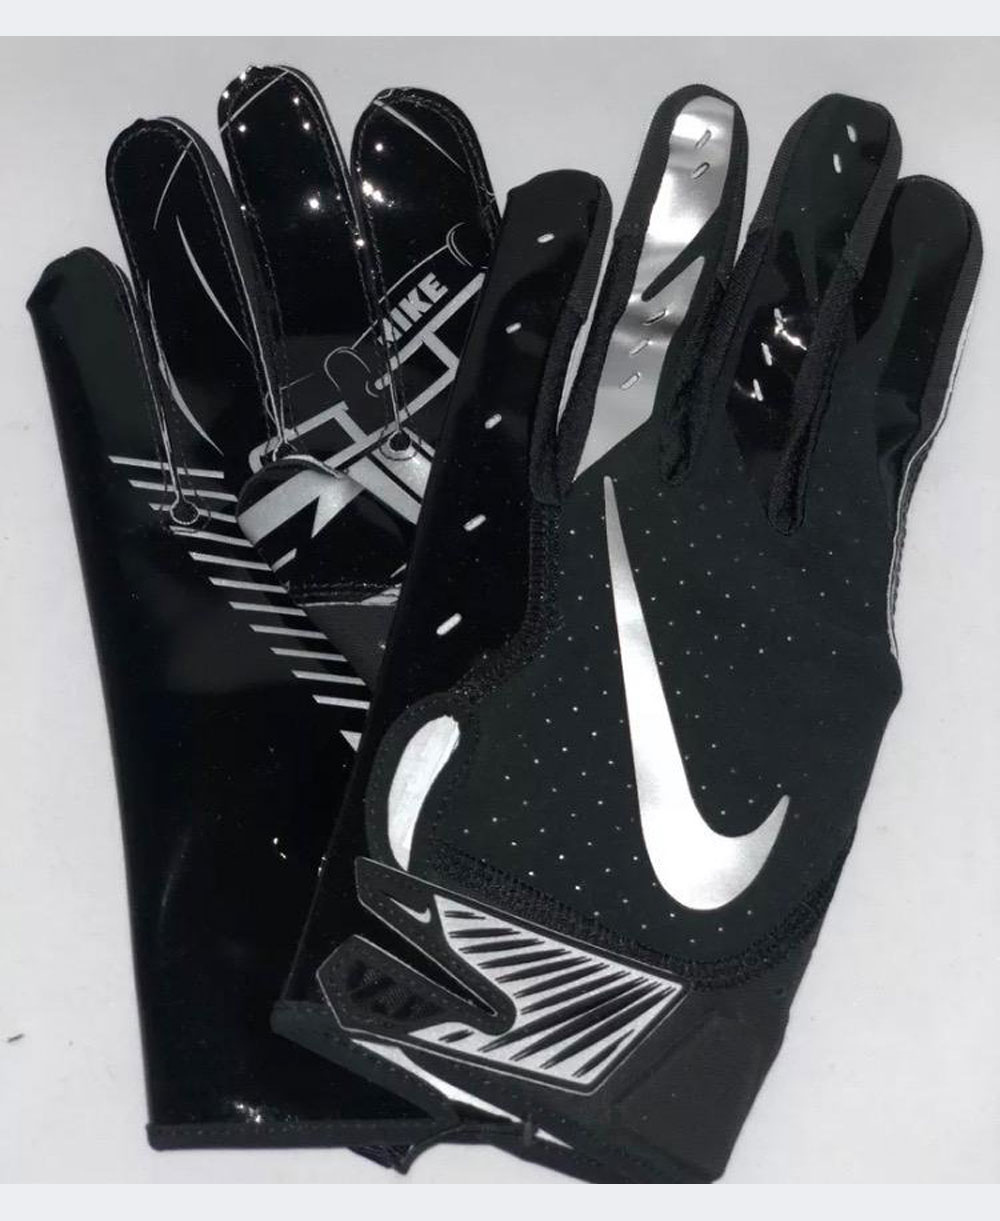 silver football gloves